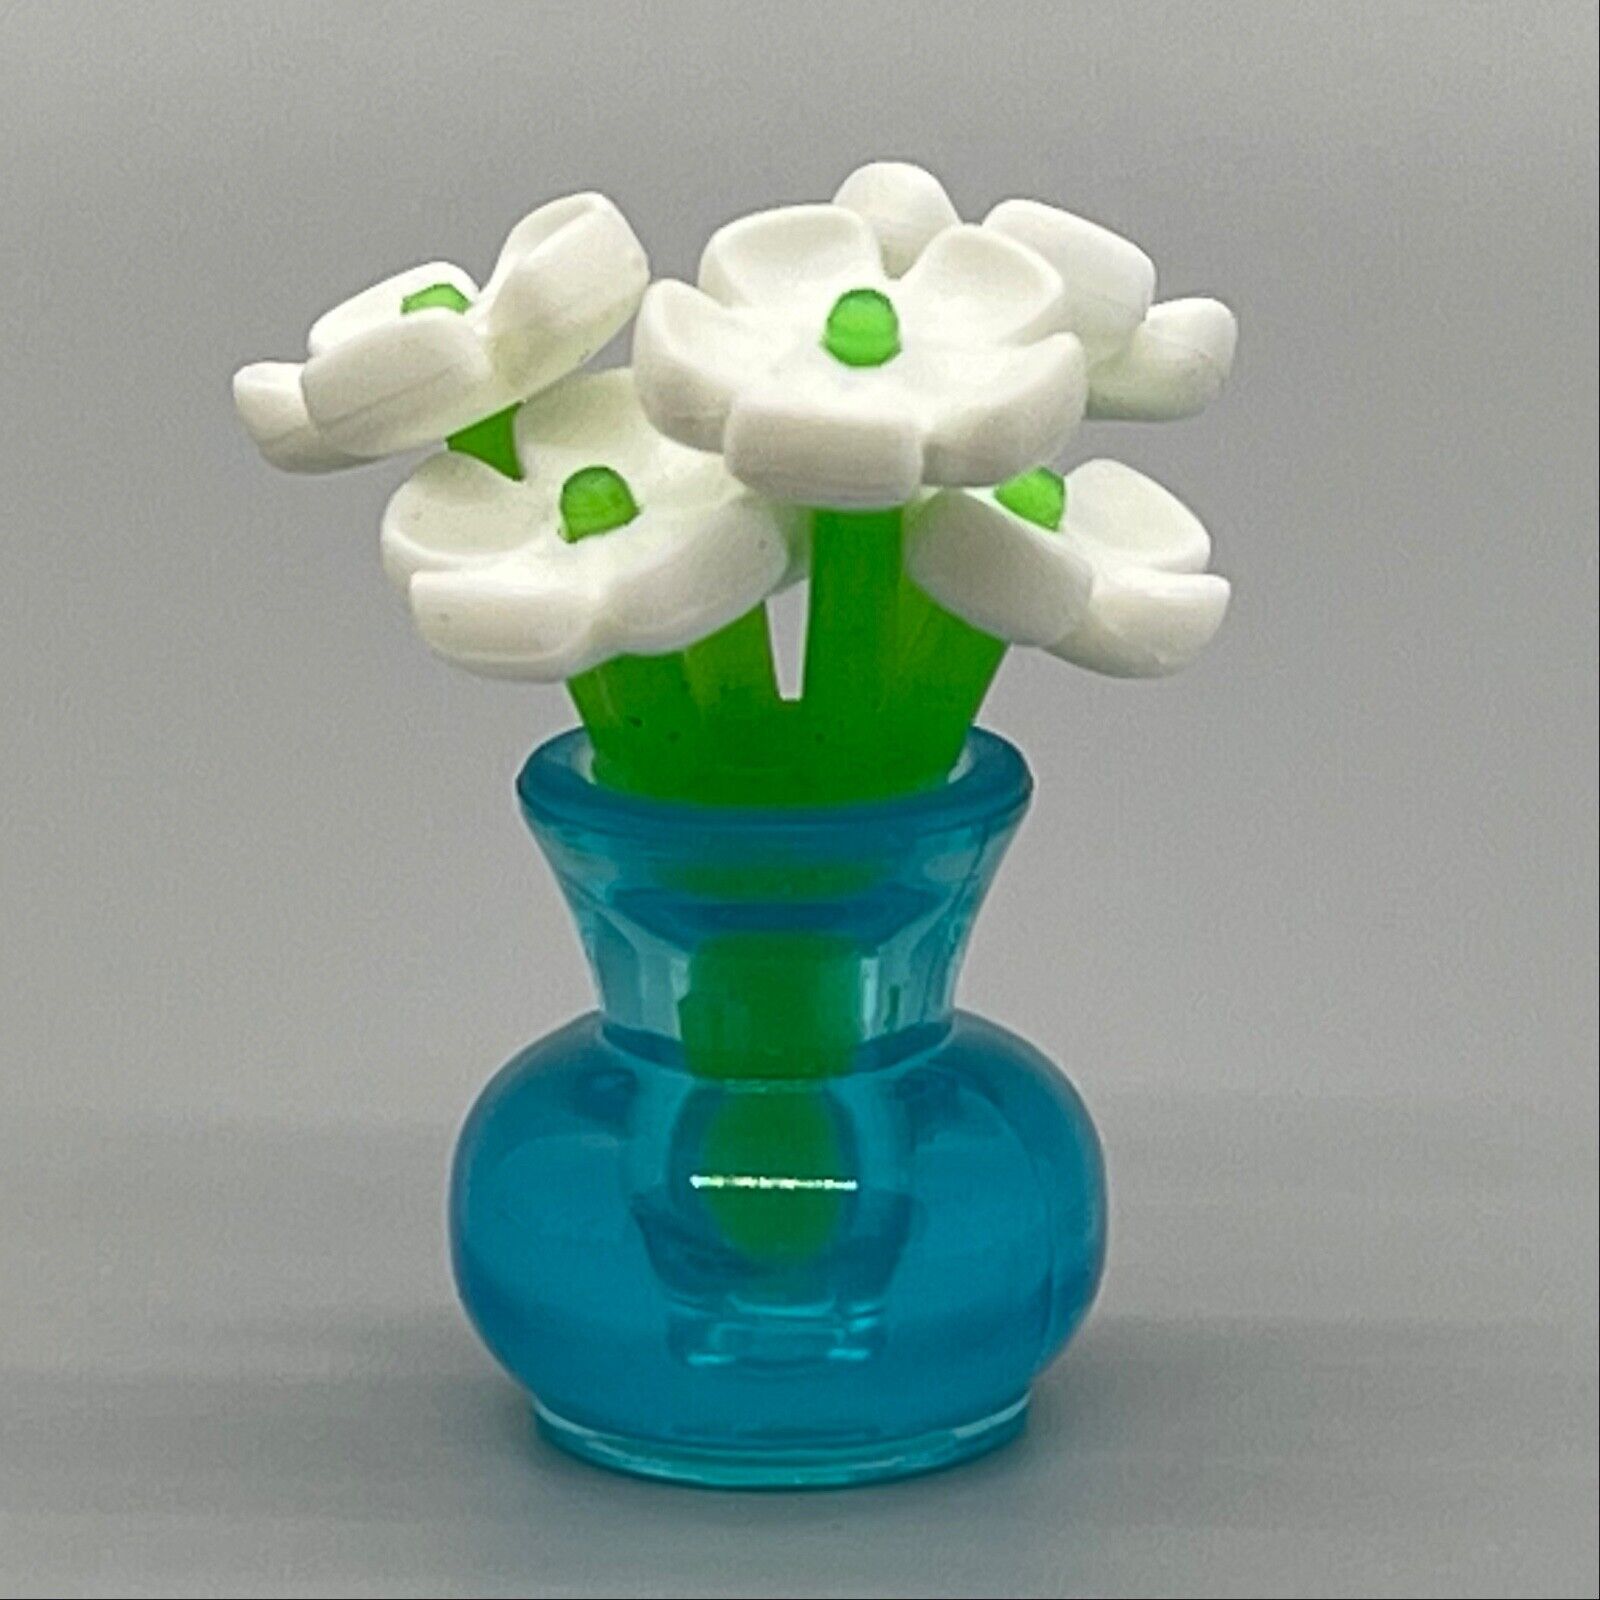 Playmobil Blue Translucent Vase White Daisies Flowers Table Deco